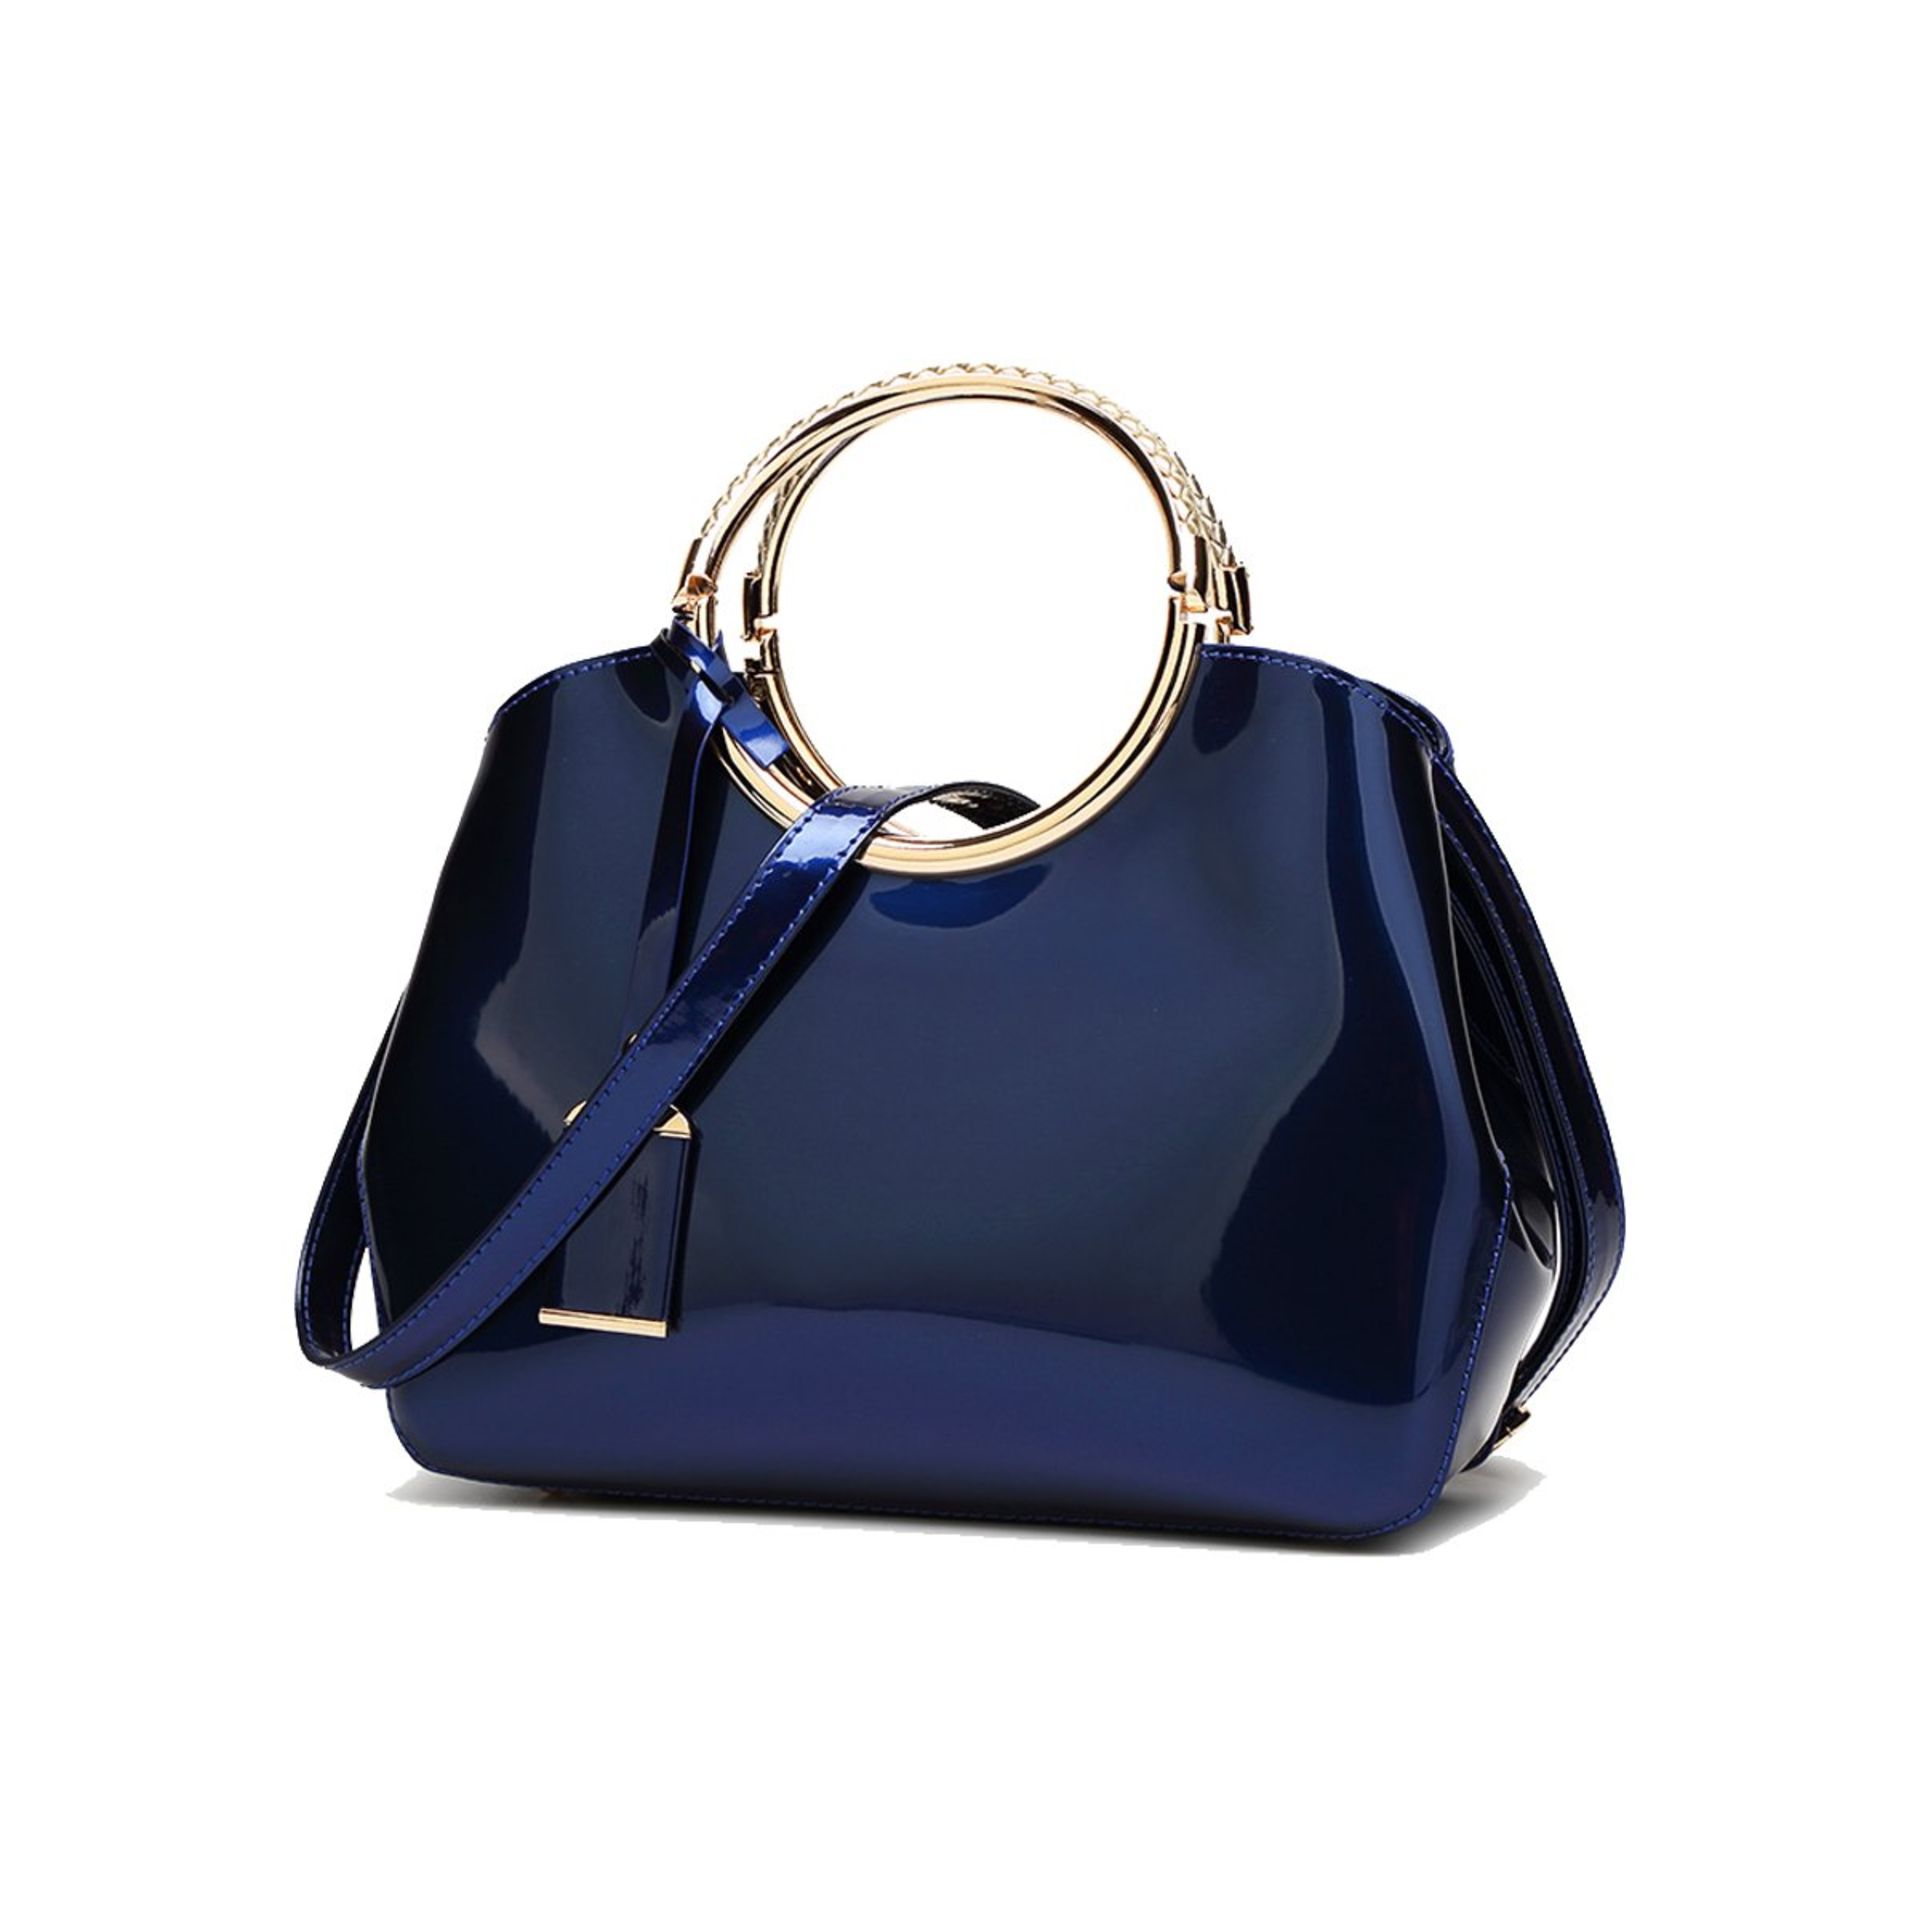 Brand New Women's Coolives Golden Strap Handbag in Royal Blue RRP £44.99